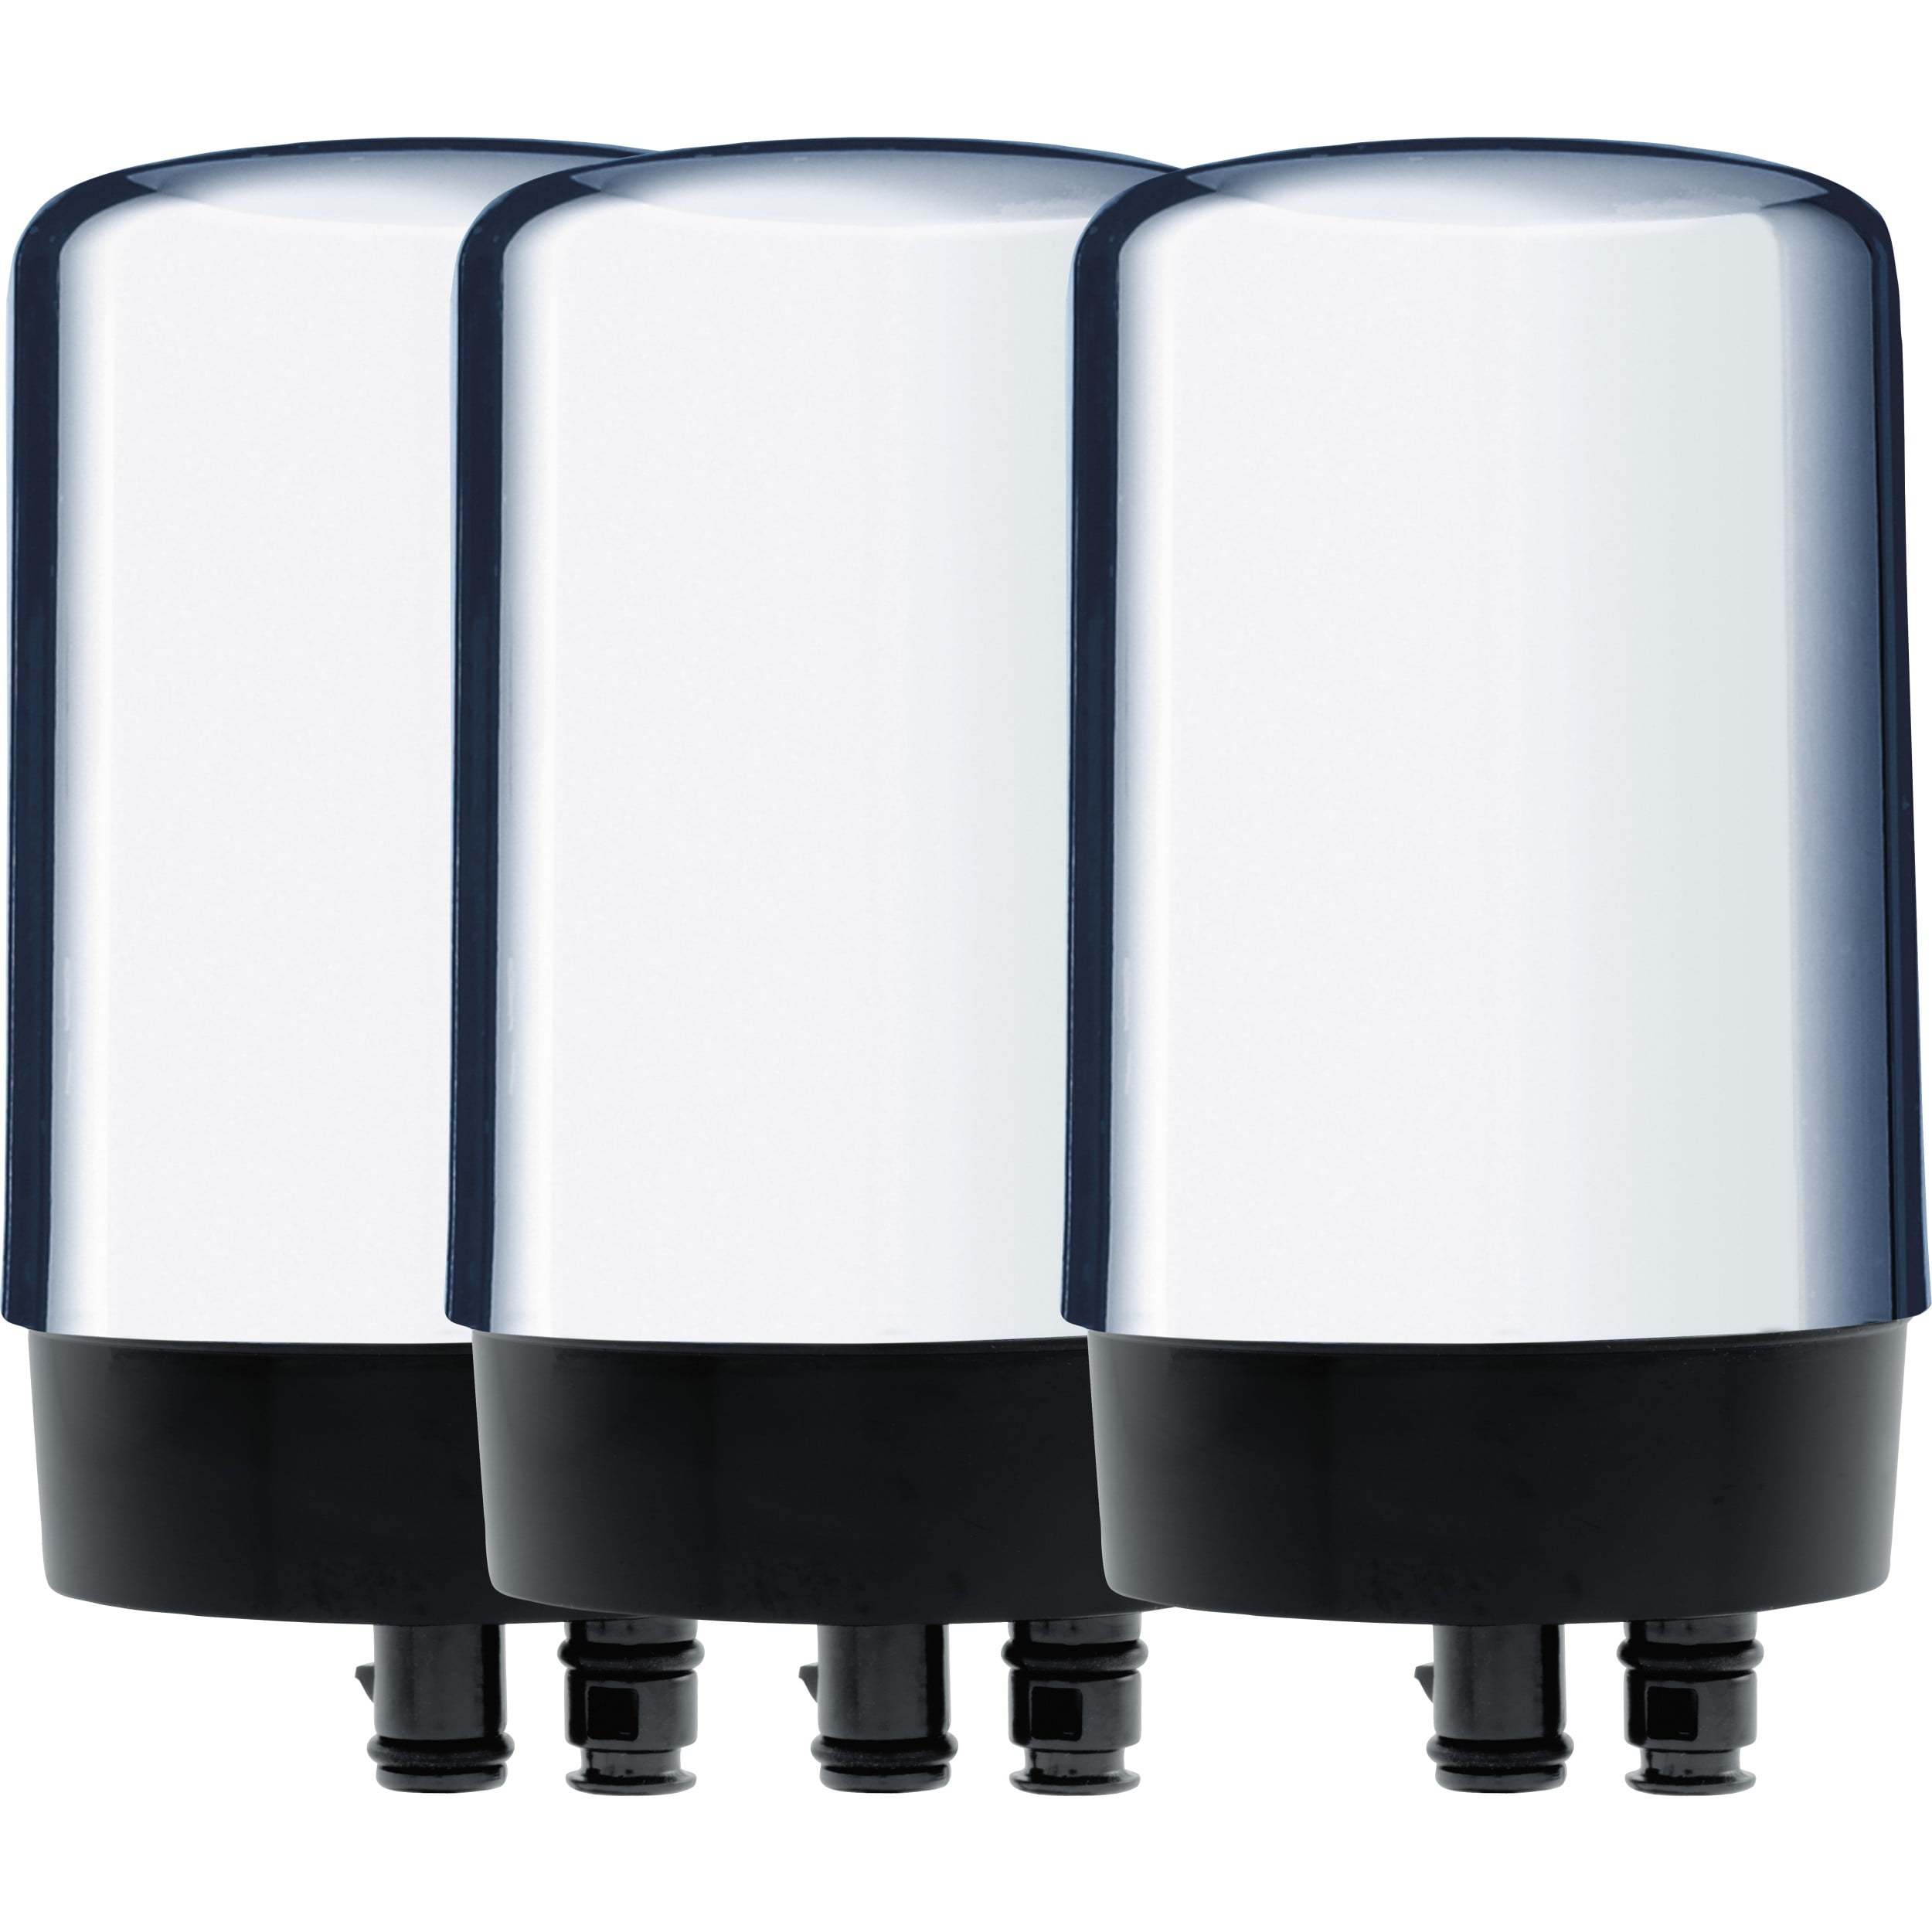 Brita Chrome Tap Water Faucet Replacement Filter, 3 Pack